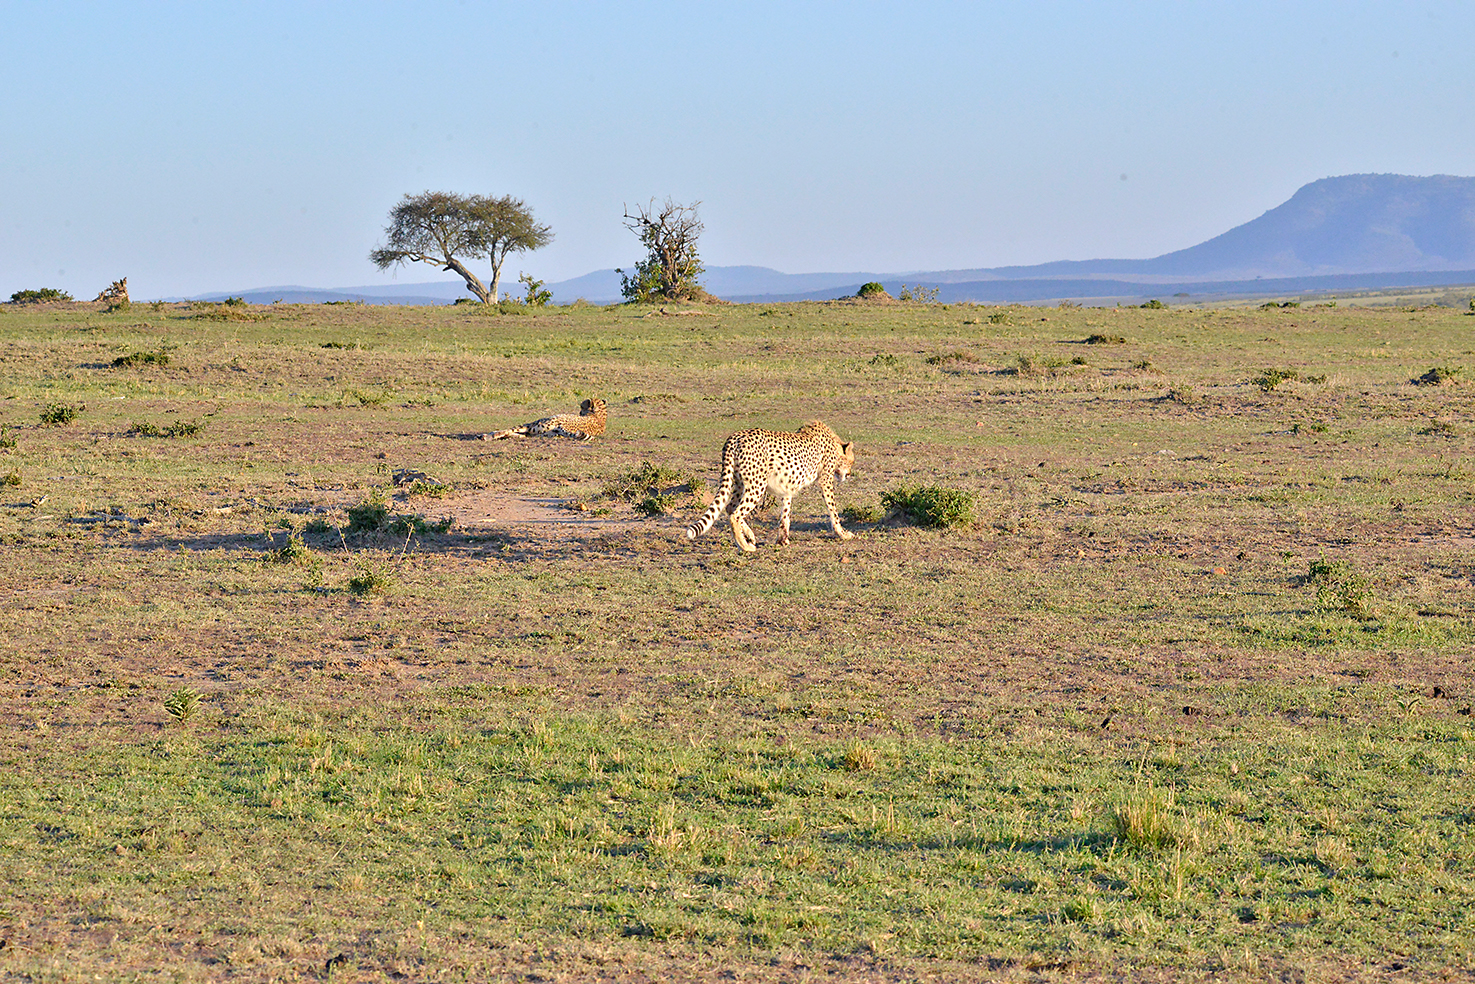 046 Masai Mara 1